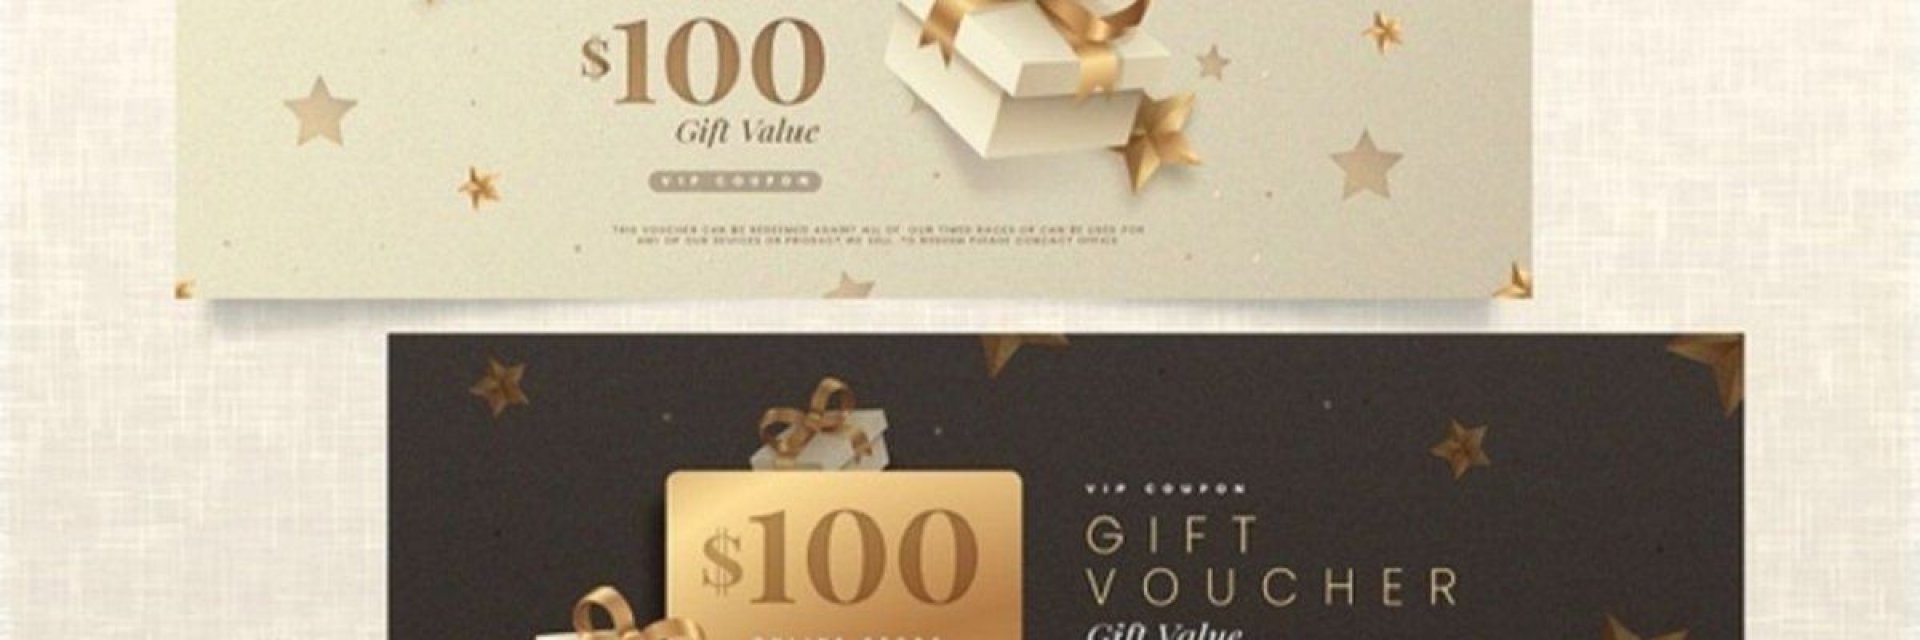 golden-gift-voucher-template-pack-52683-53664-2-jpg-41e6843cd376bb30